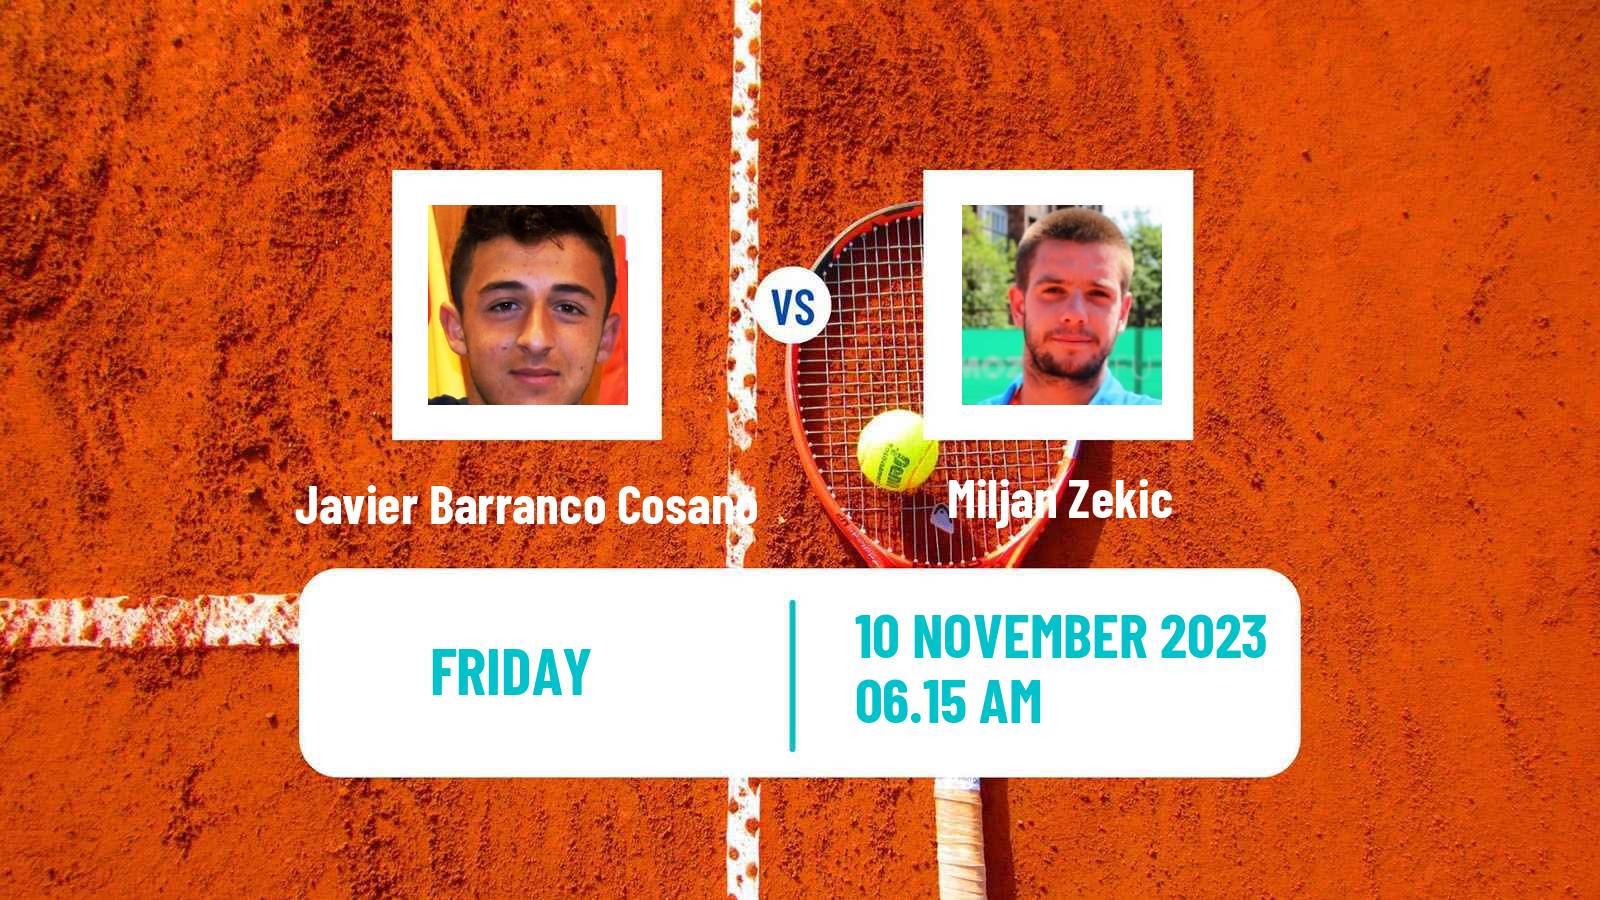 Tennis ITF M25 Benicarlo Men Javier Barranco Cosano - Miljan Zekic